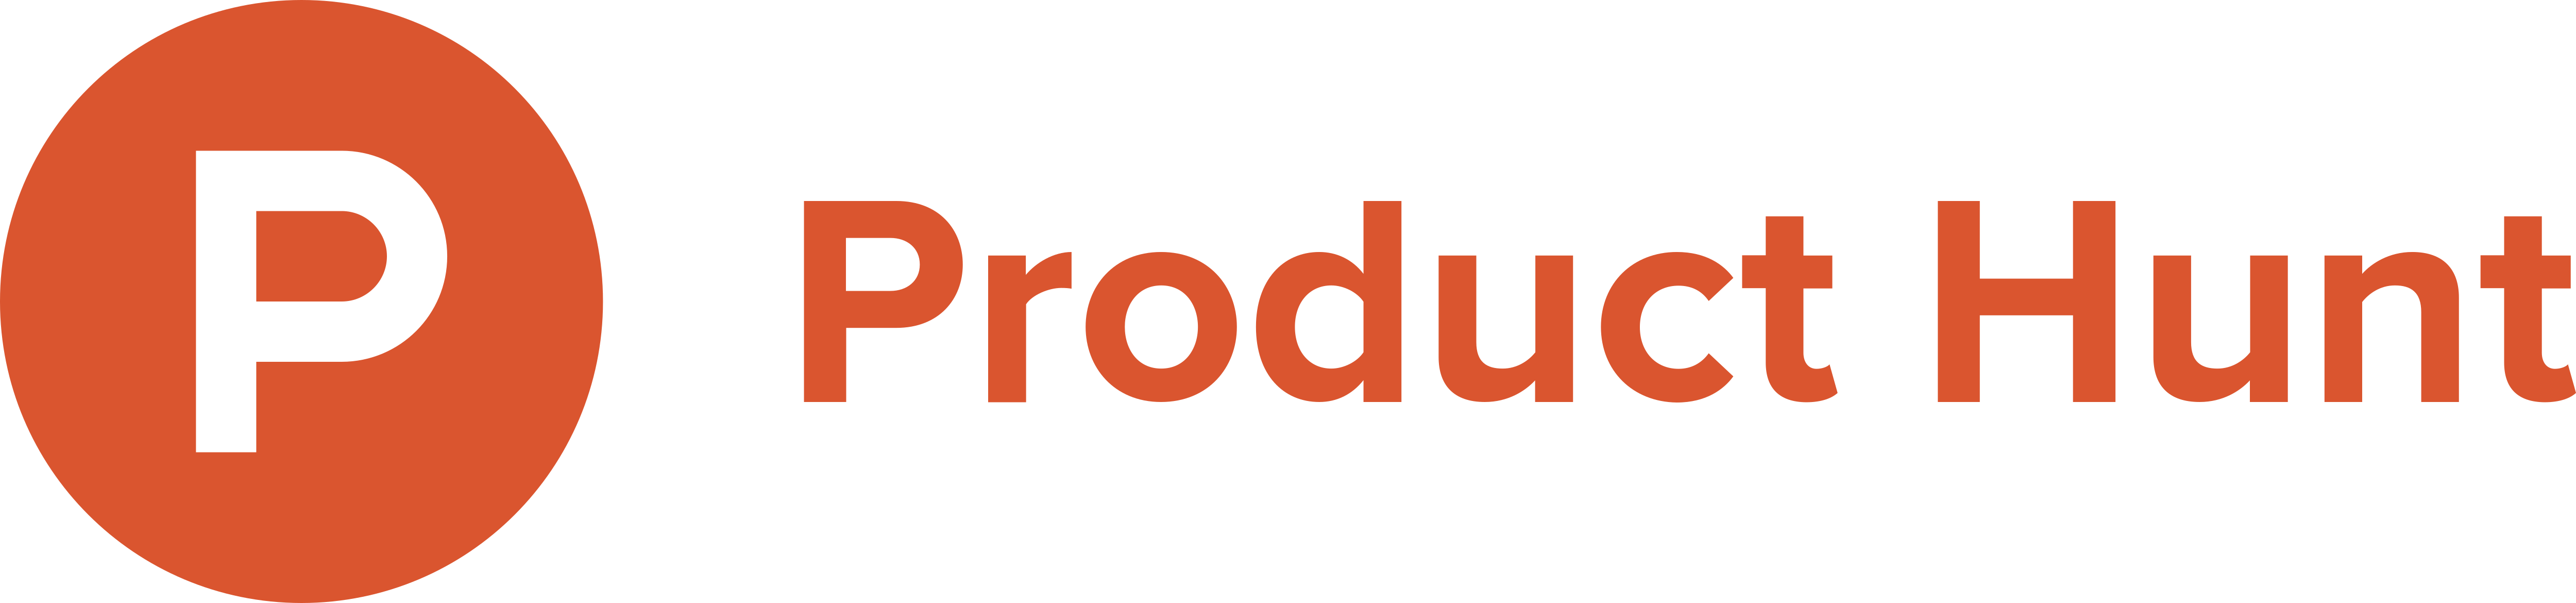 Product Hunt – Logos Download